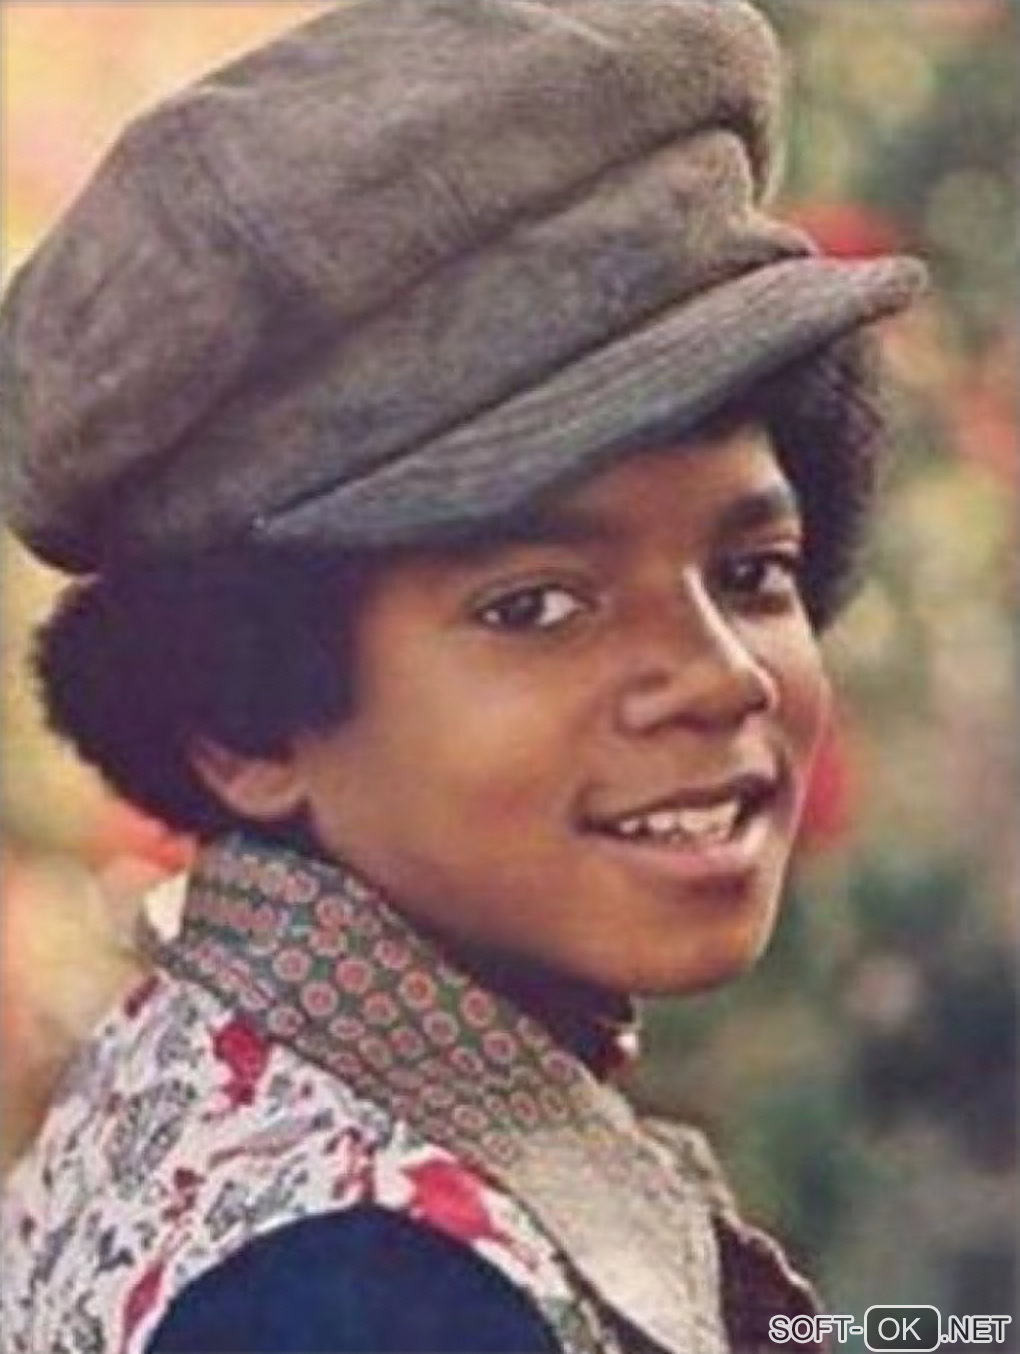 The appearance "Michael Jackson Screensaver"